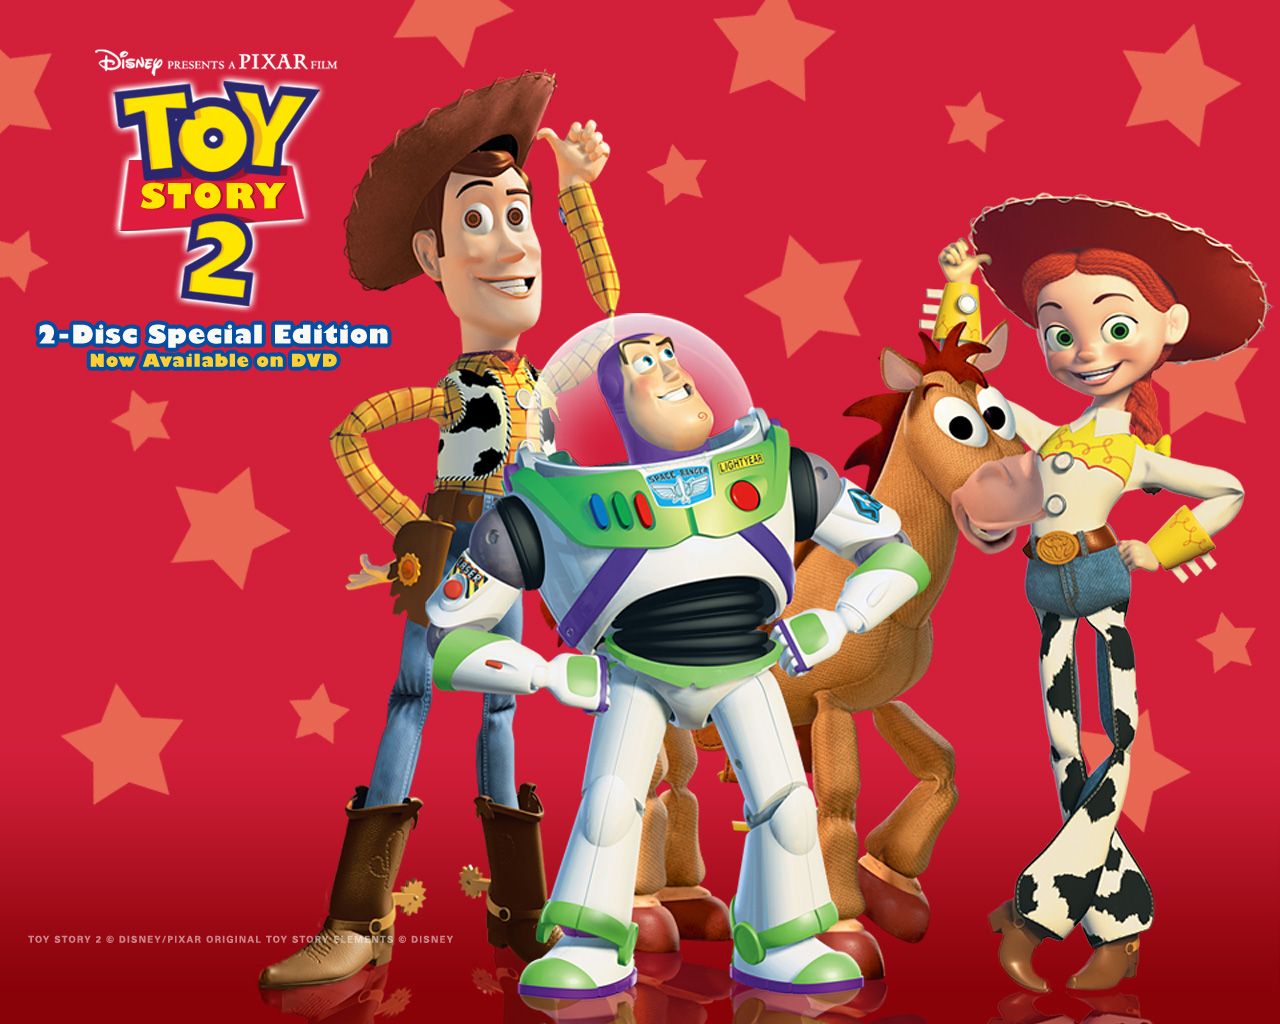 Toy Story 2 - Toy Story 2 fondo de pantalla (36440636) - fanpop